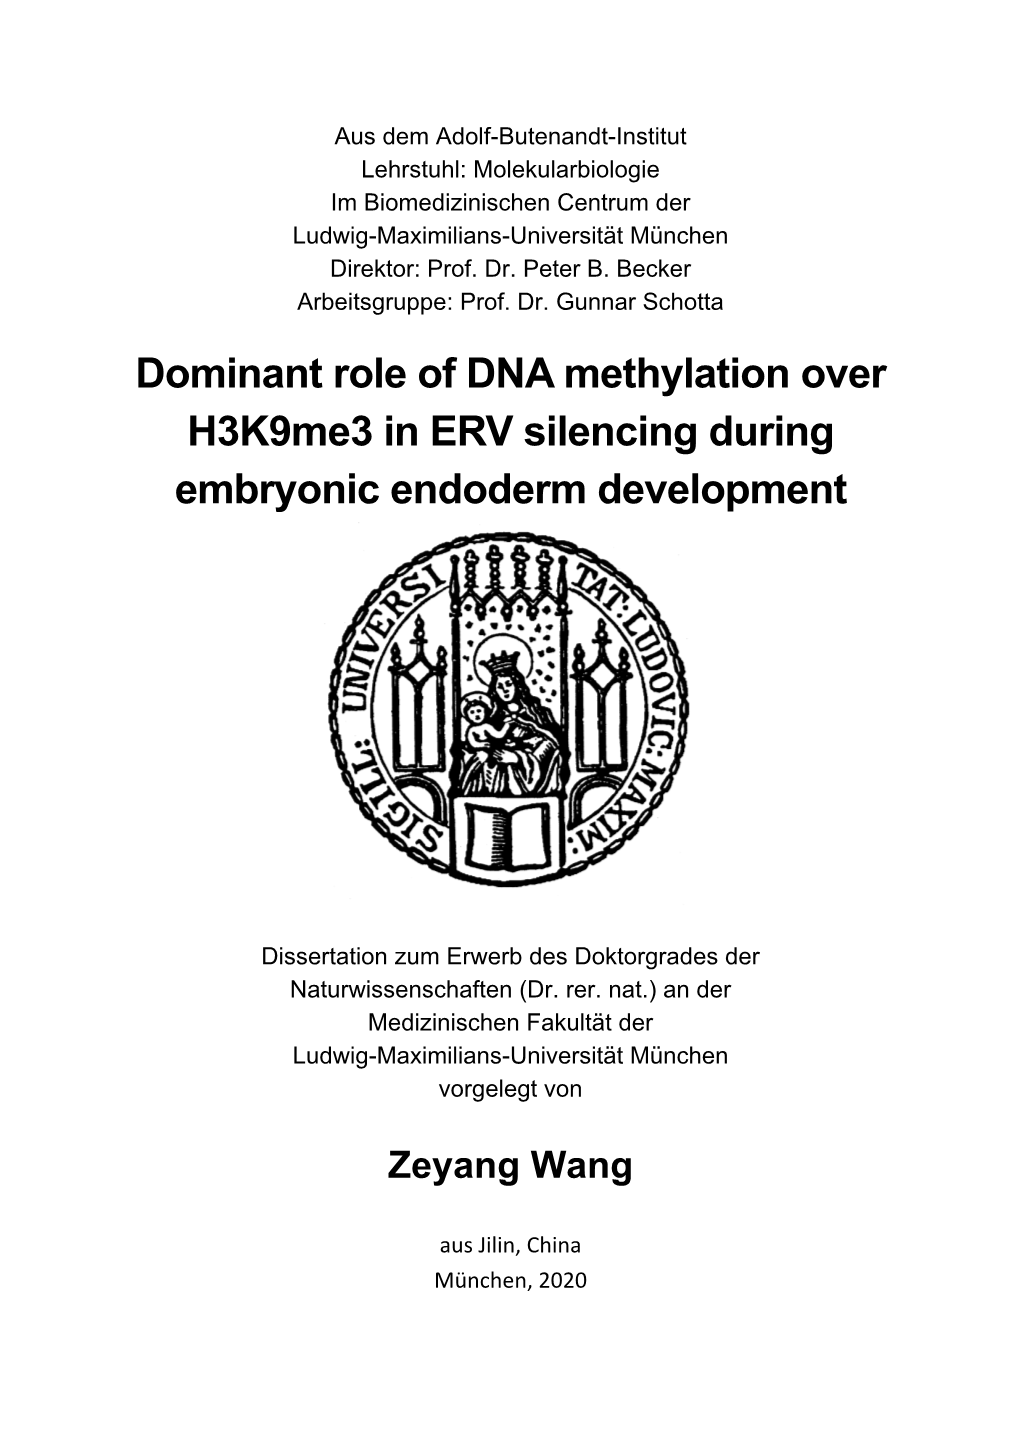 Dominant Role of DNA Methylation Over H3k9me3 in ERV Silencing During